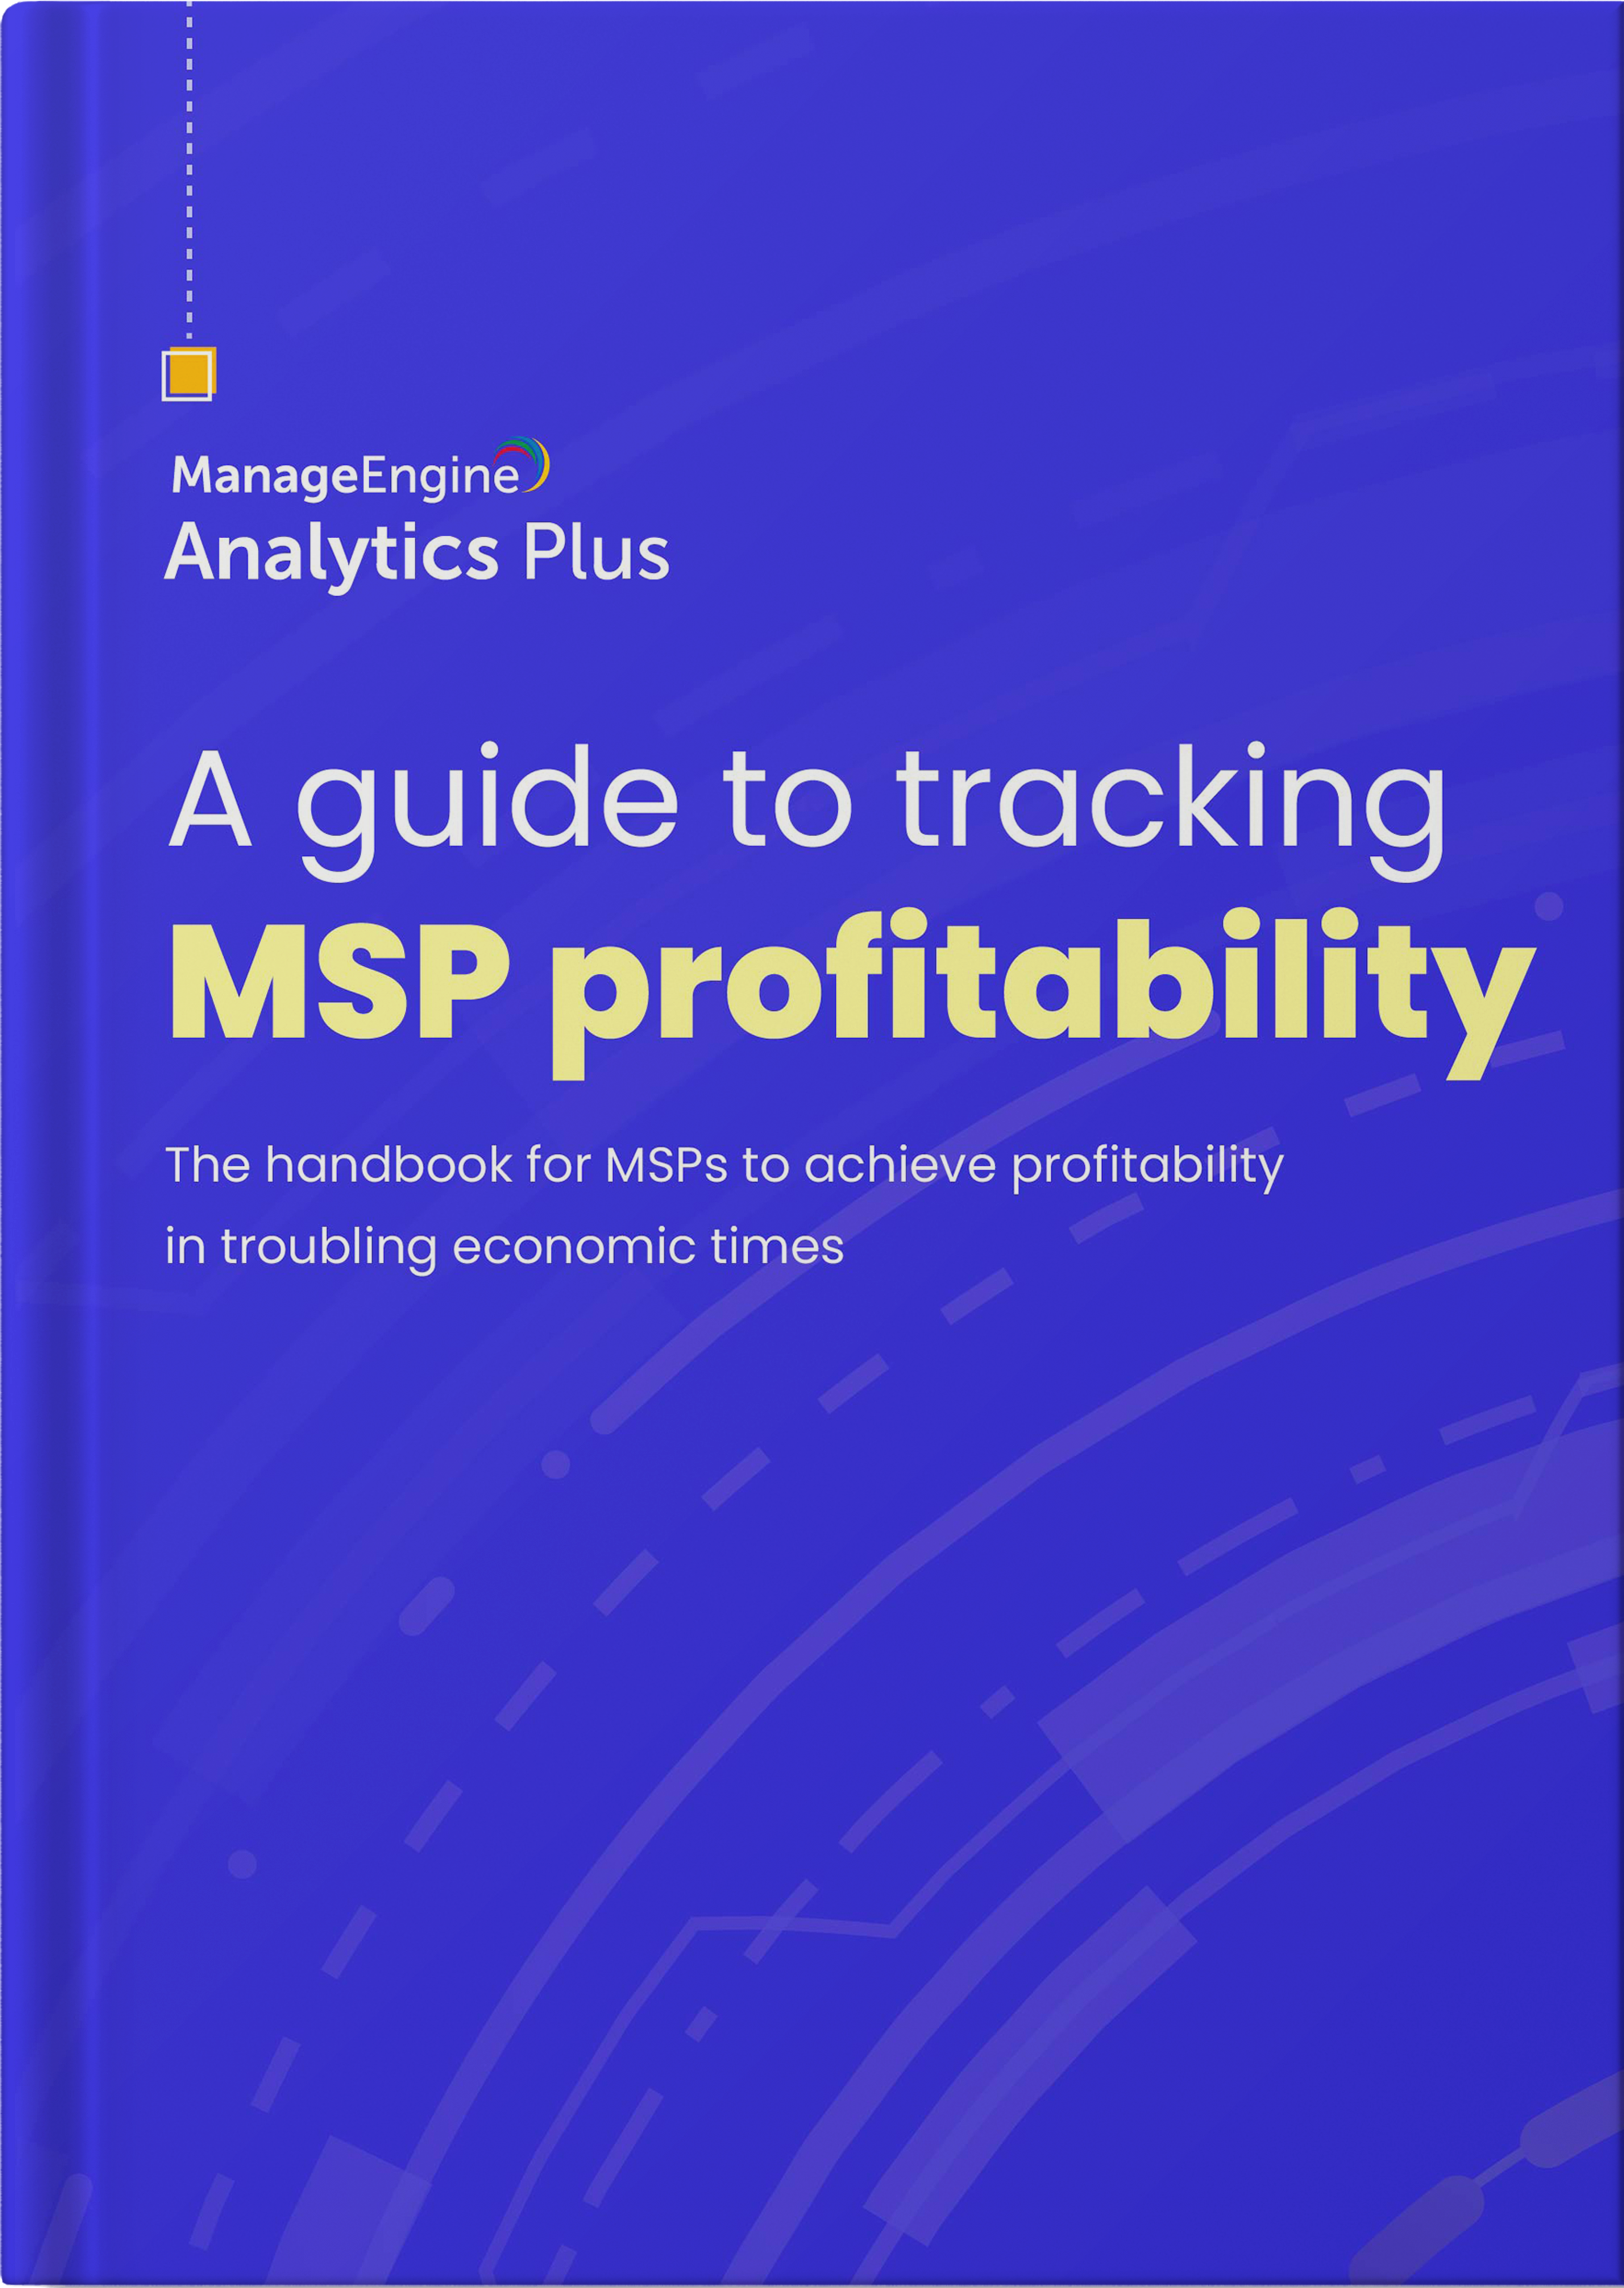 How MSPs can profitability using analytics